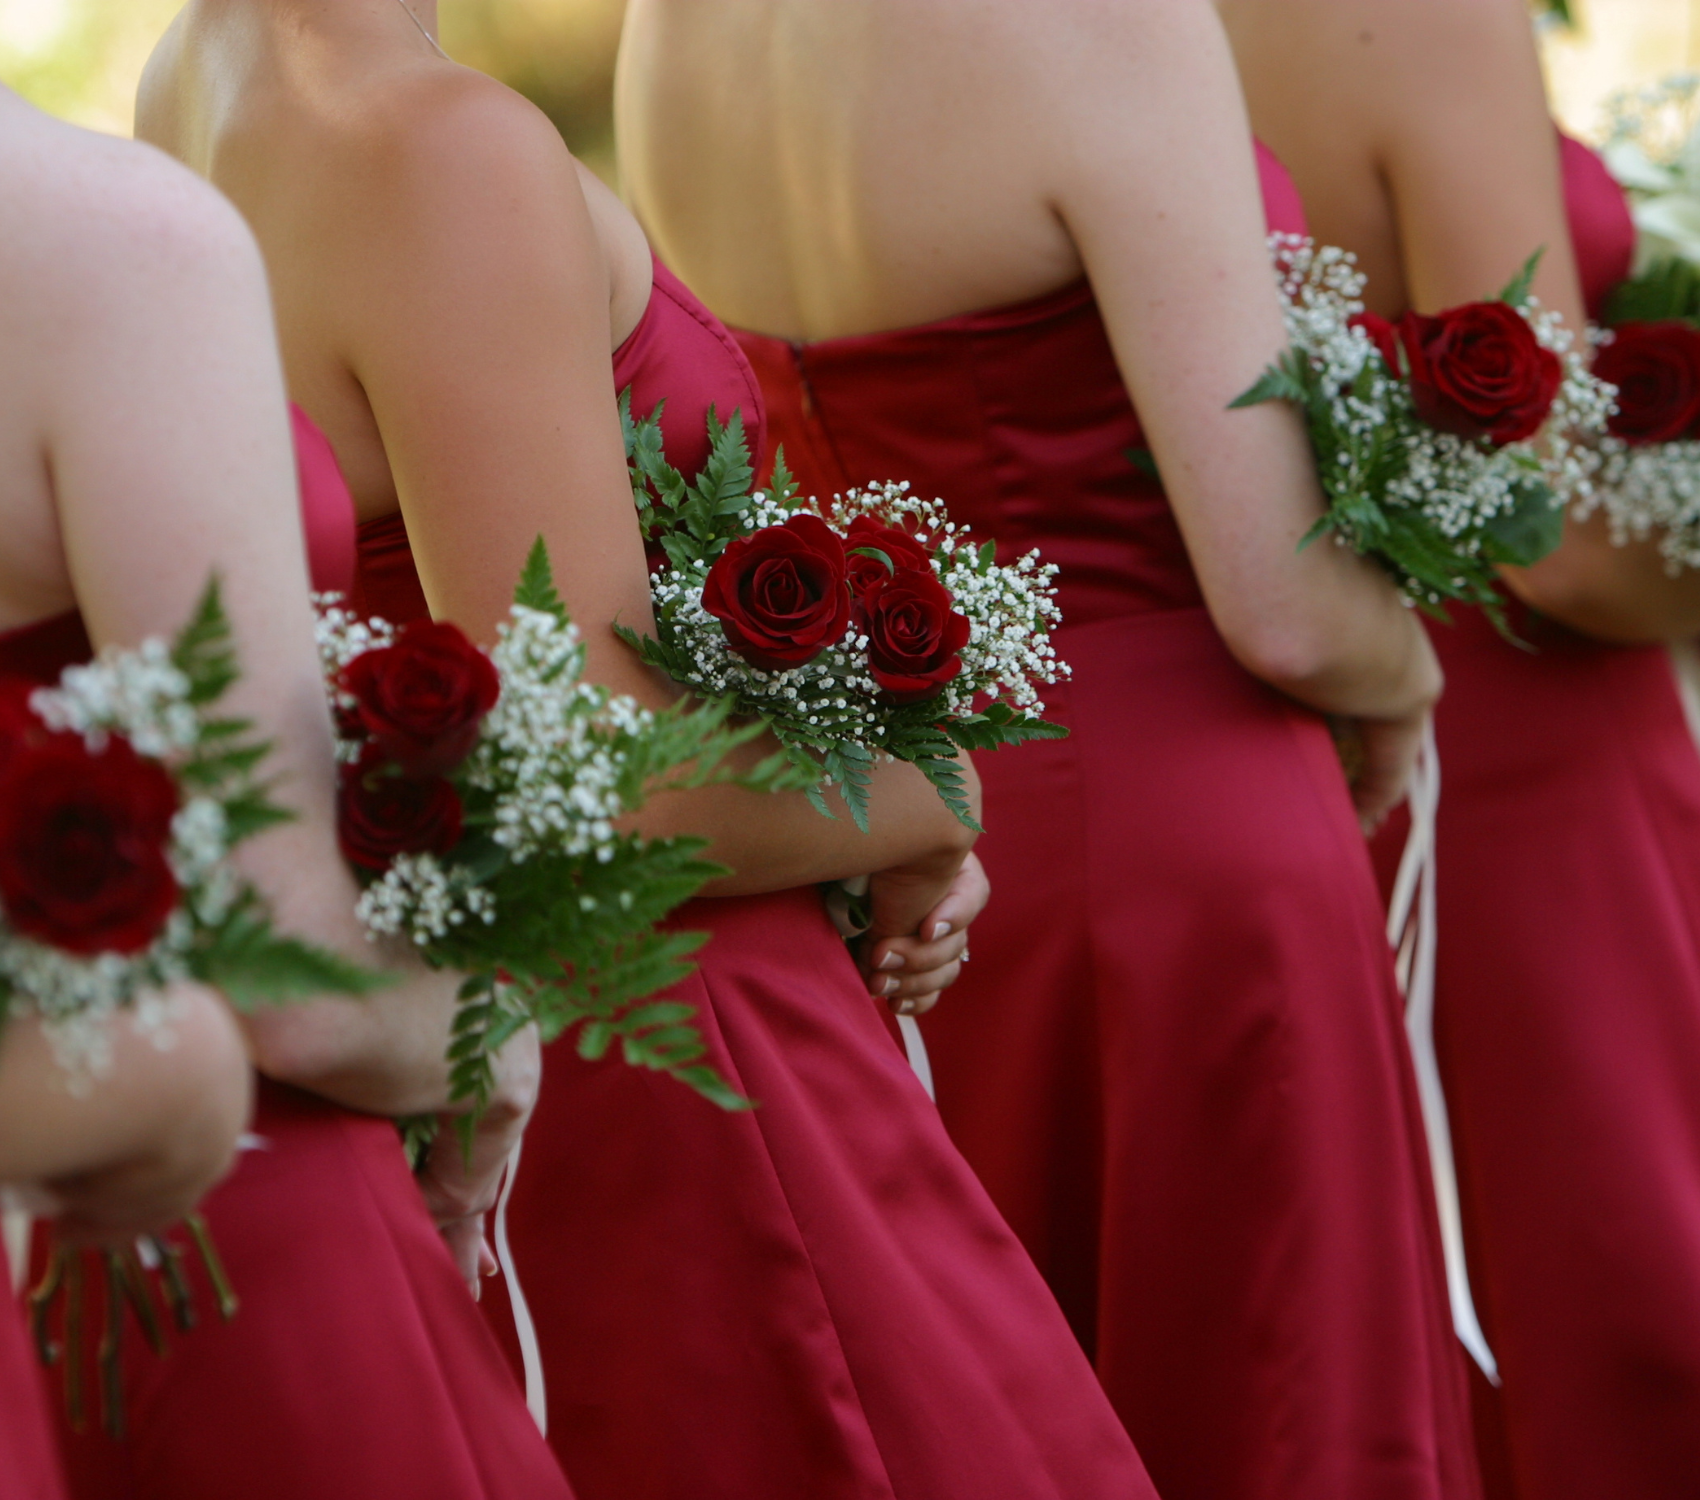 Brides maids at Bantr in Rothschild, WI